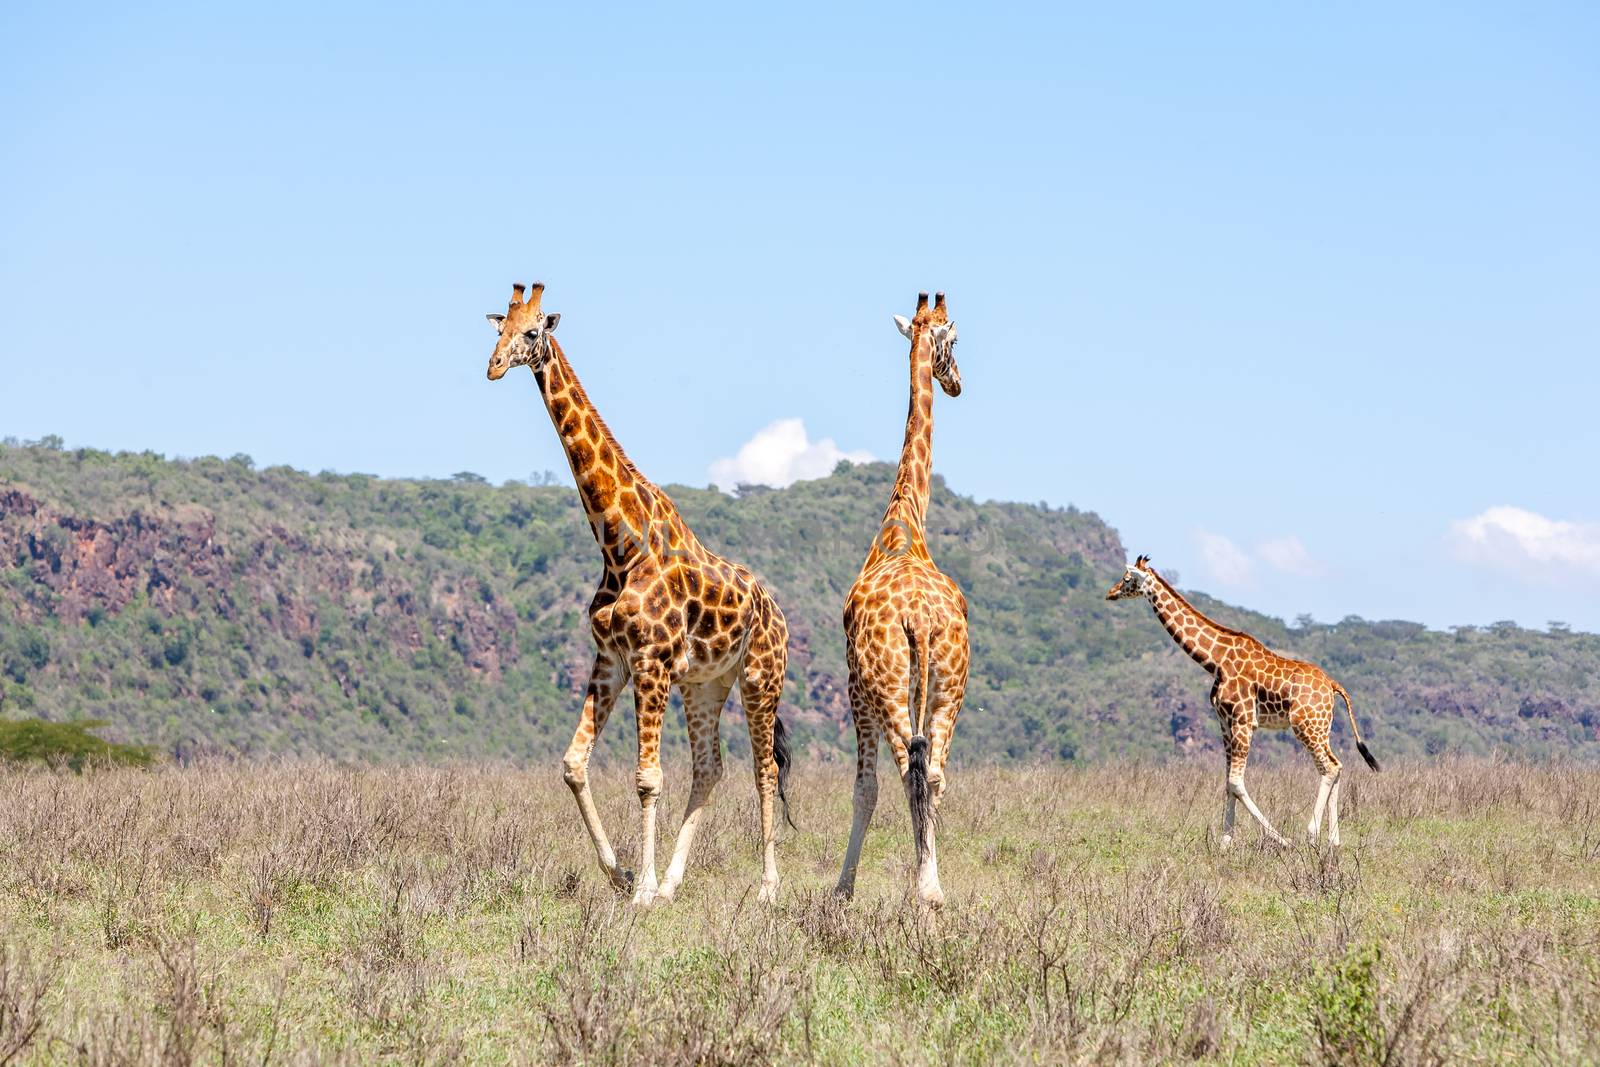 Three Wild giraffes herd in savannah, Kenya, Africa